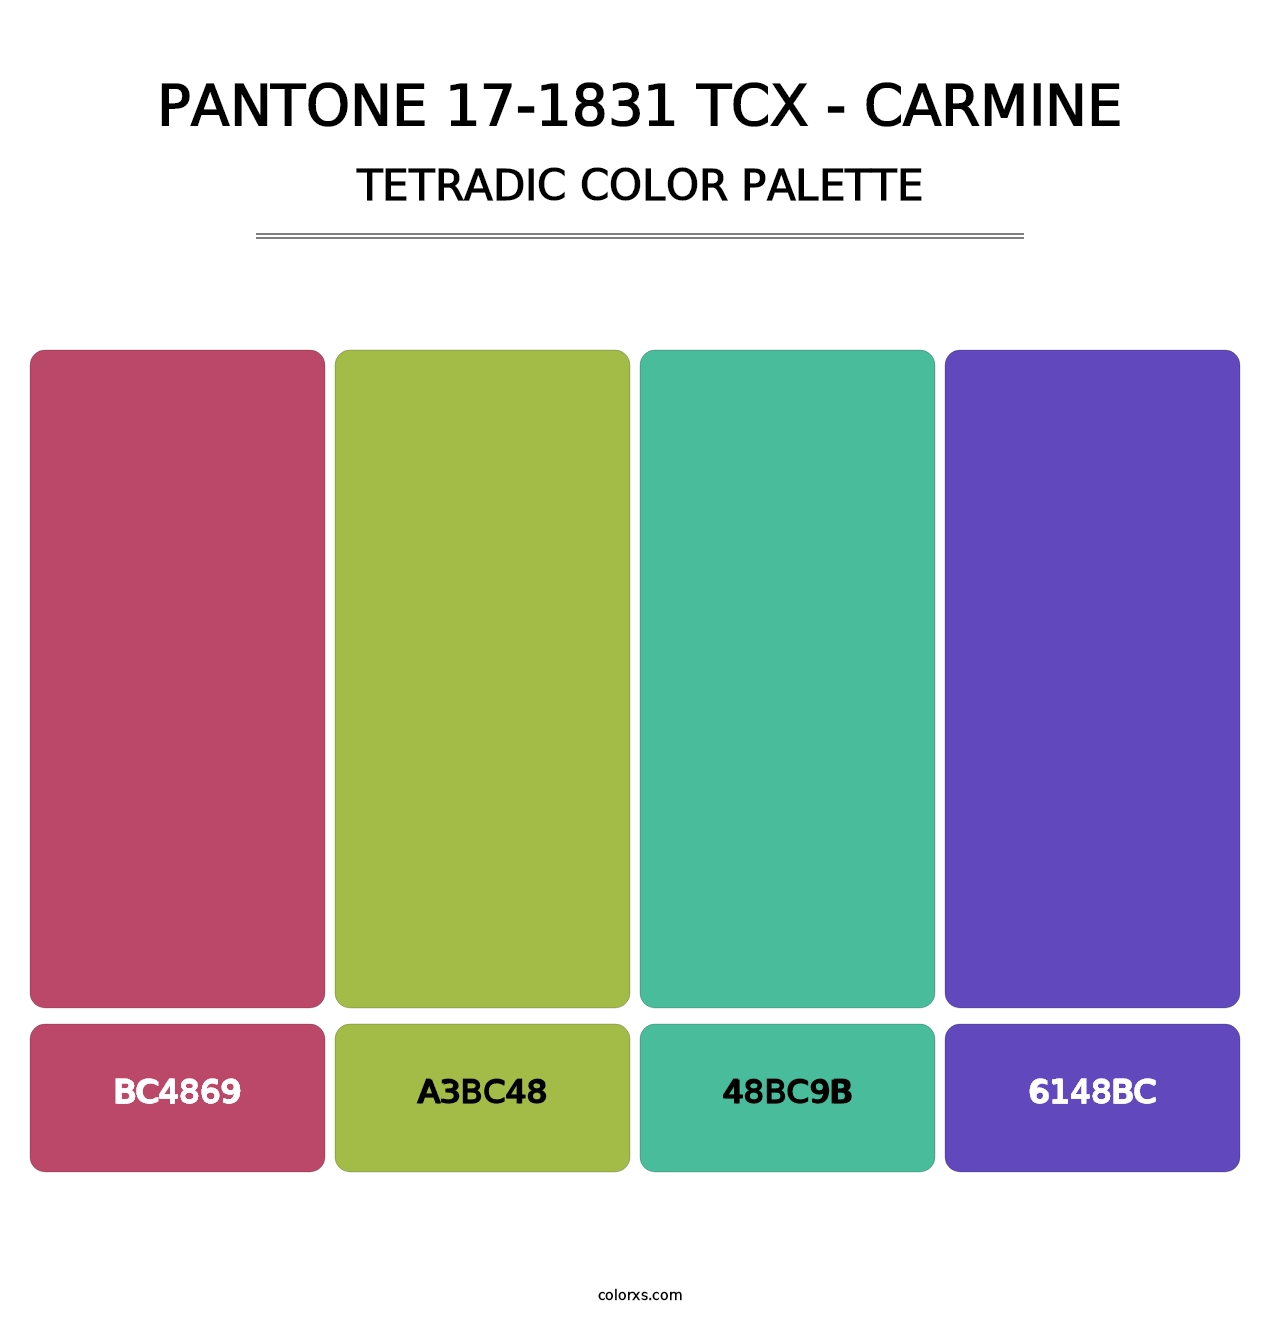 PANTONE 17-1831 TCX - Carmine - Tetradic Color Palette